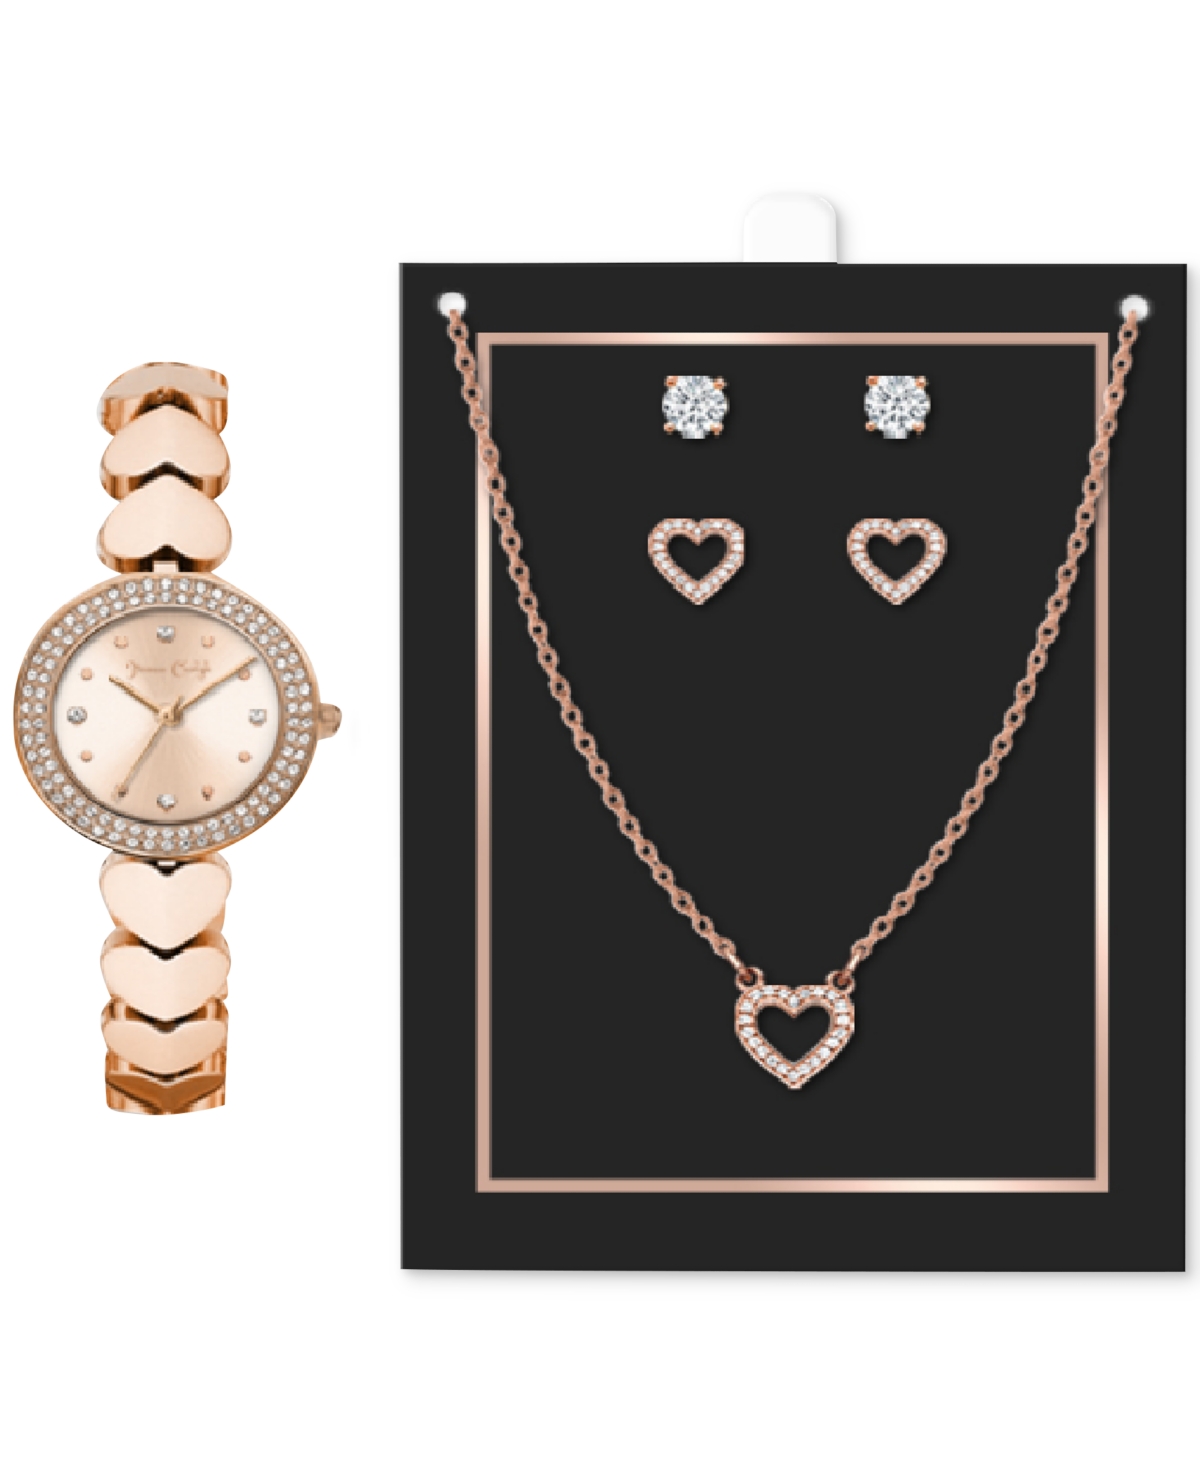 Jessica Carlyle Women's Heart-link Bracelet Watch 28mm Jewelry Gift Set In Rose Gold